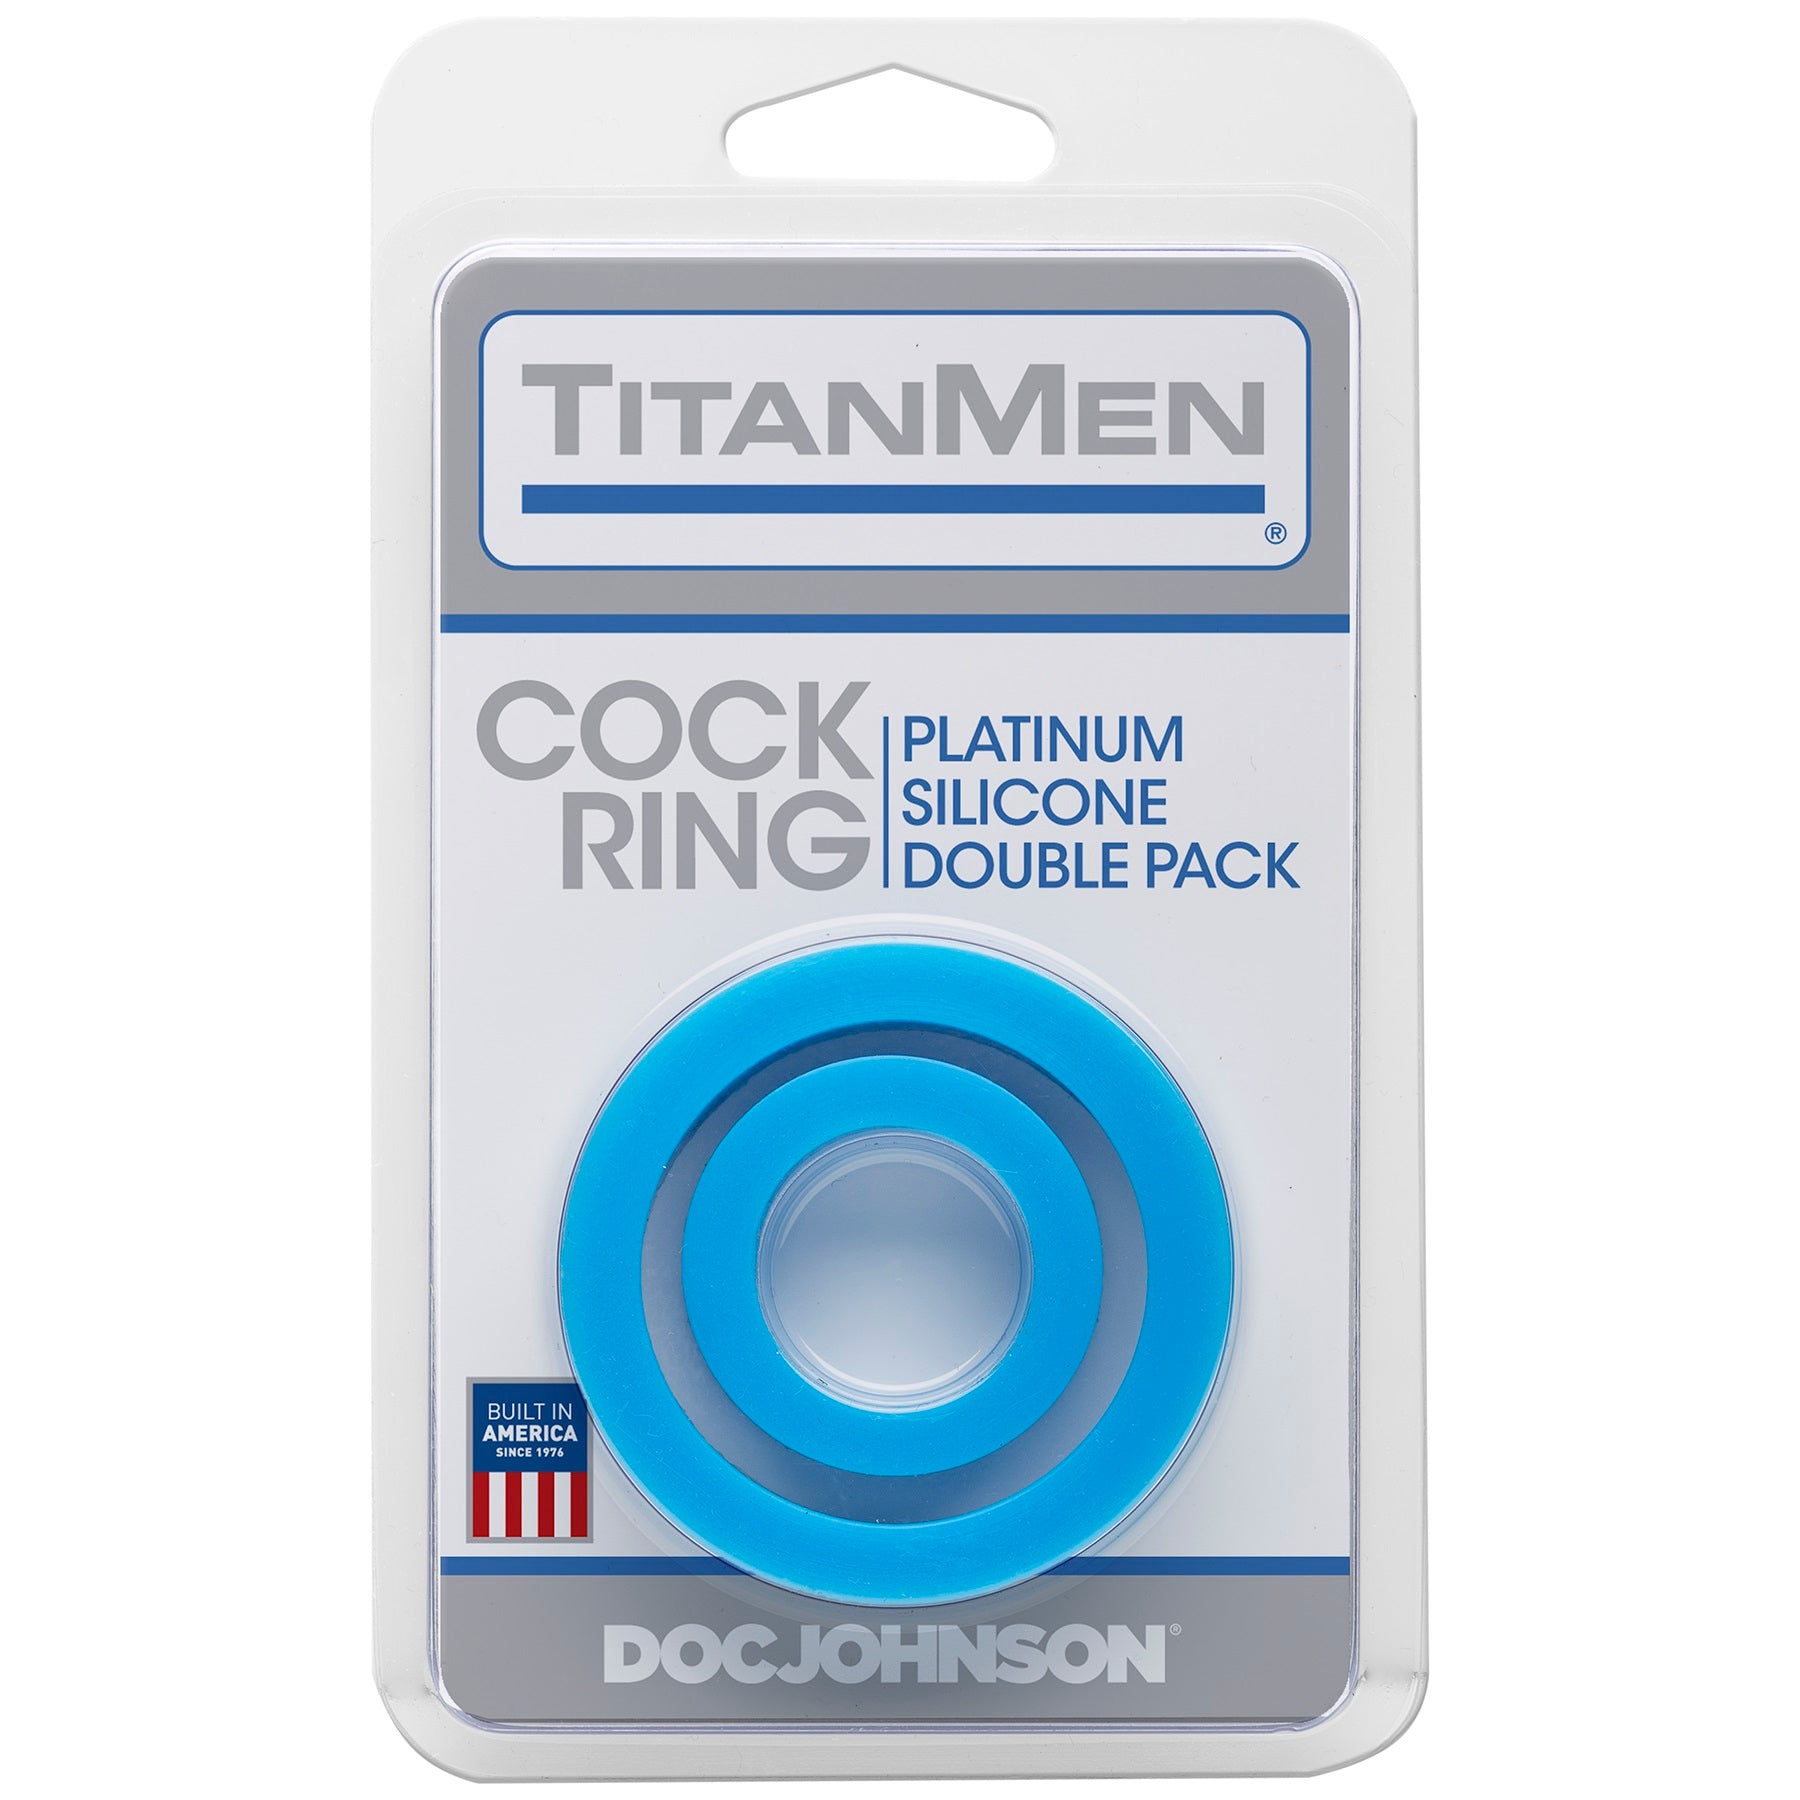 Titanmen Cock Ring Platinum Silicone Double Pack - Blue DJ3503-04-CD